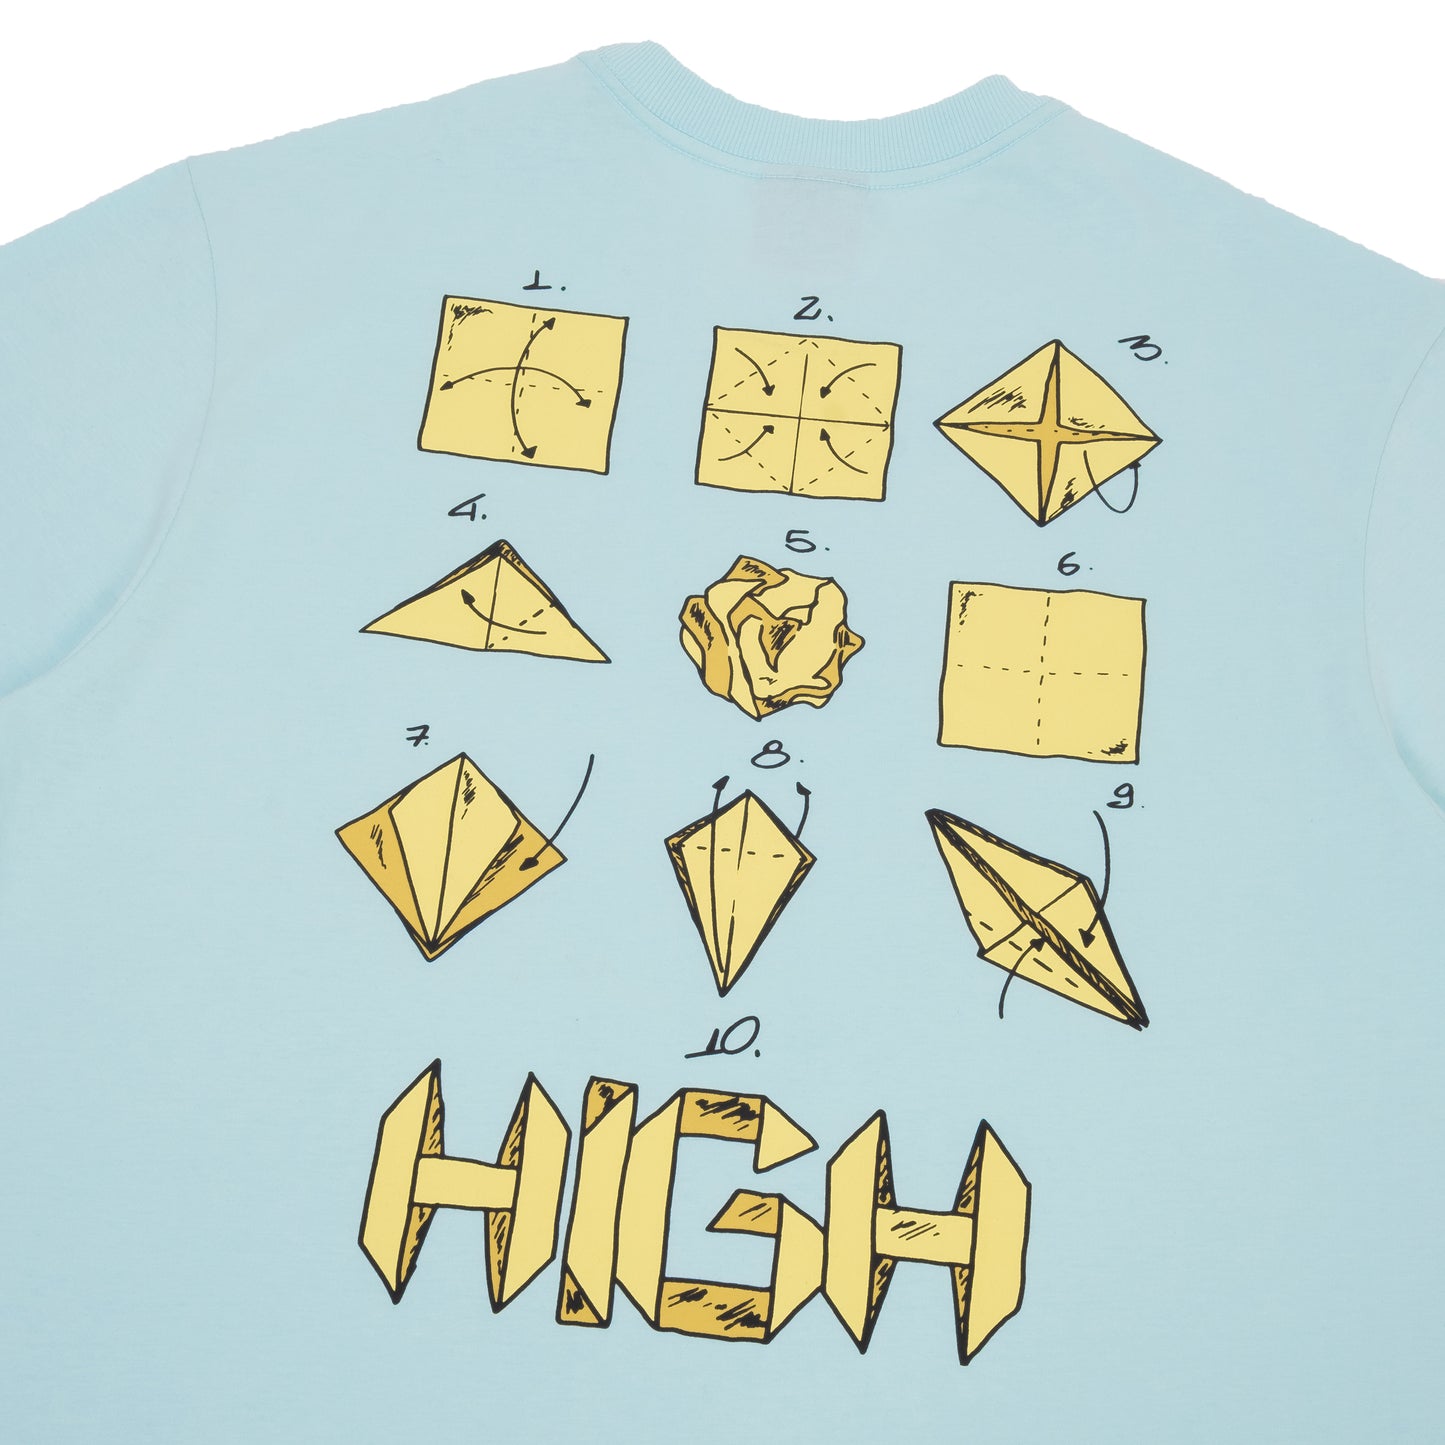 HIGH - Camiseta Origami Soft Blue